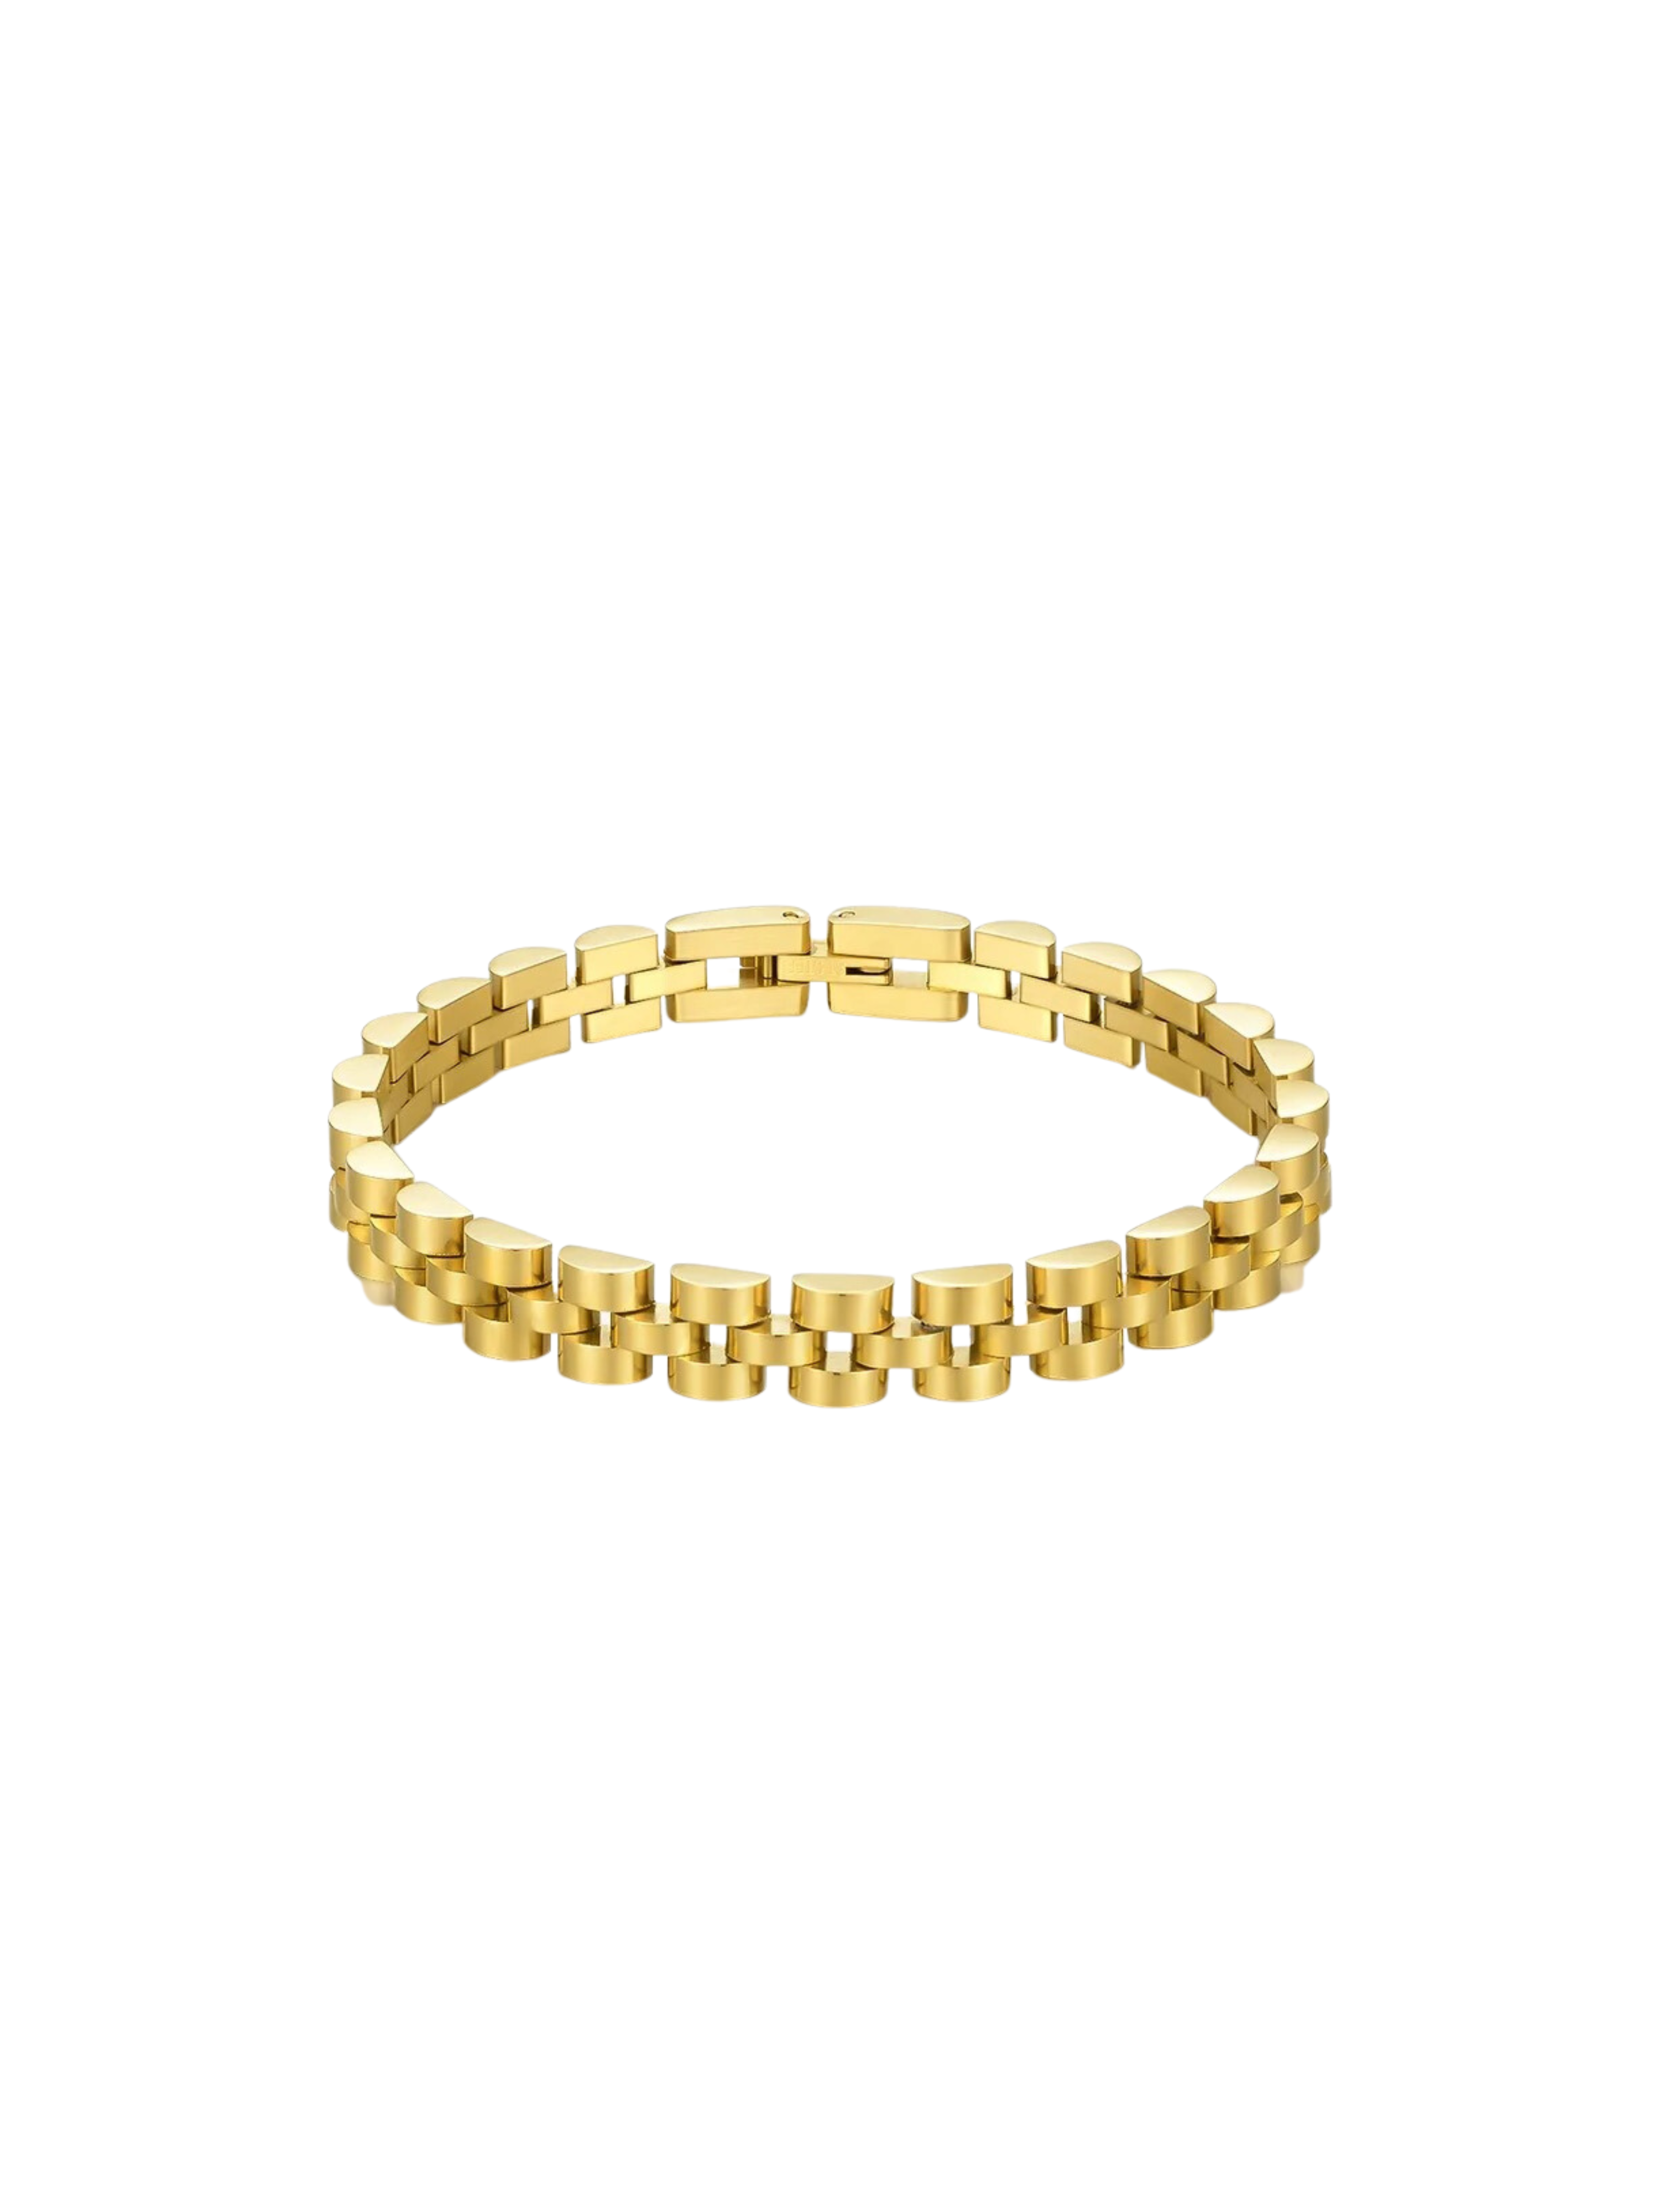 GOLDxTEAL watch band bracelet. Stylish 18k gold plated link watchband bracelet.